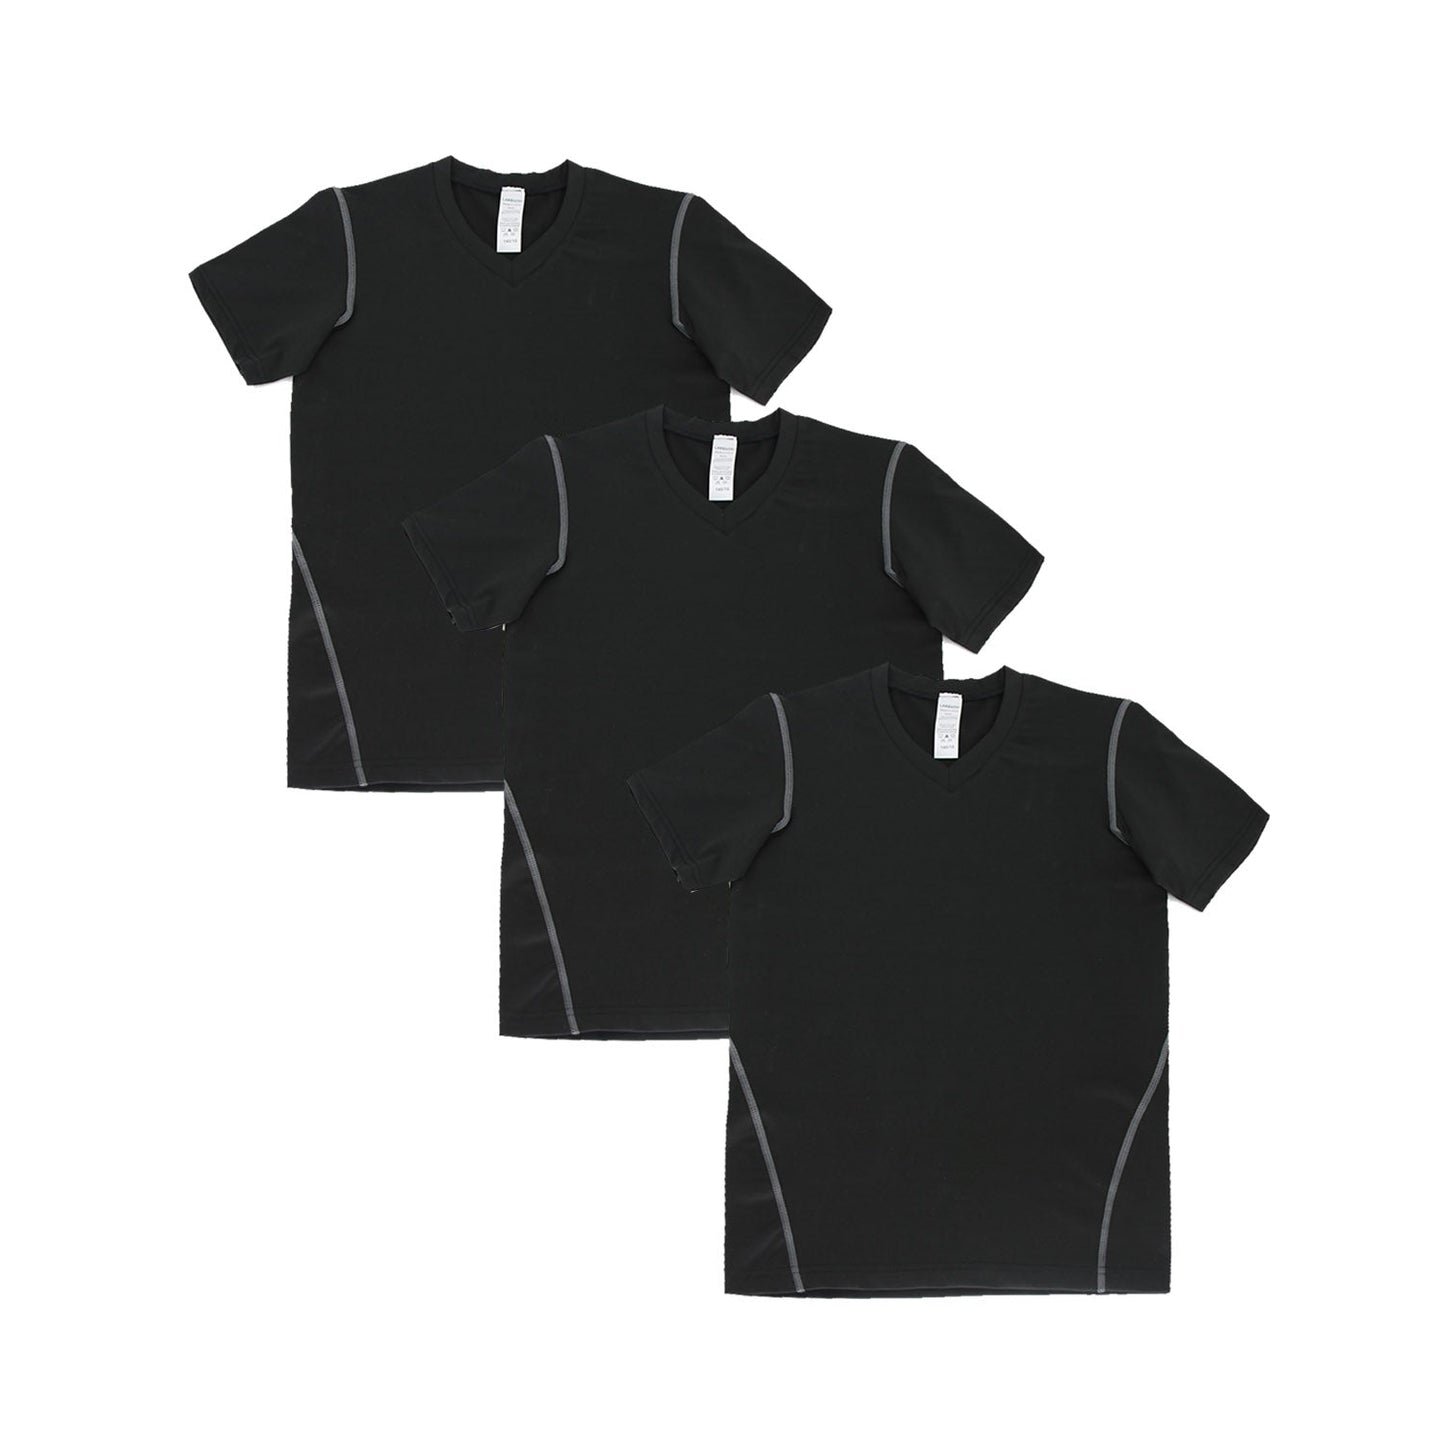 Kids Short Sleeve Base Layer Tops Compression Workout T-Shirts 3 Pack LANBAOSI